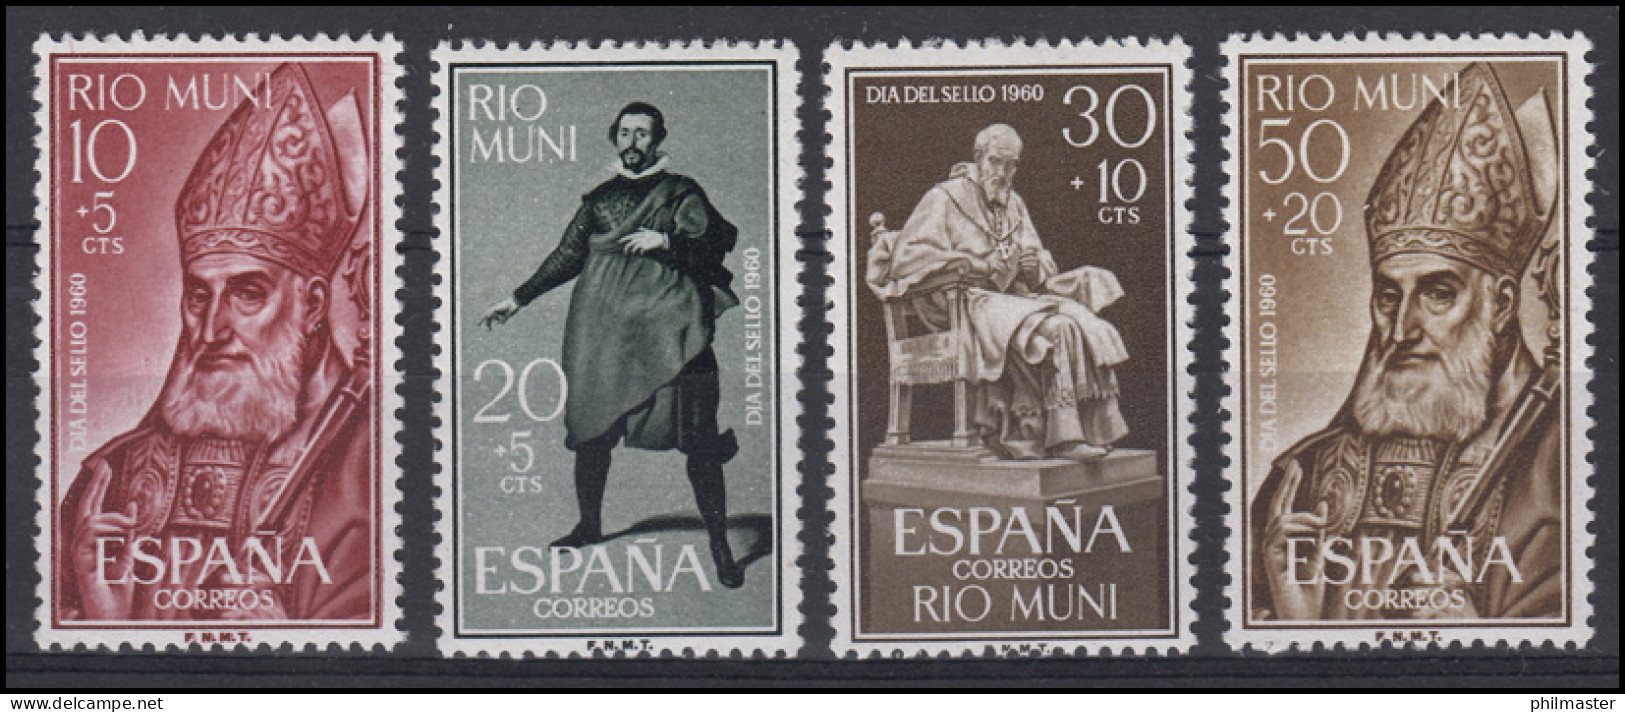 Rio Muni / Spanien: Tag Der Briefmarke 1960, 4 Werte, Satz ** - Giornata Del Francobollo